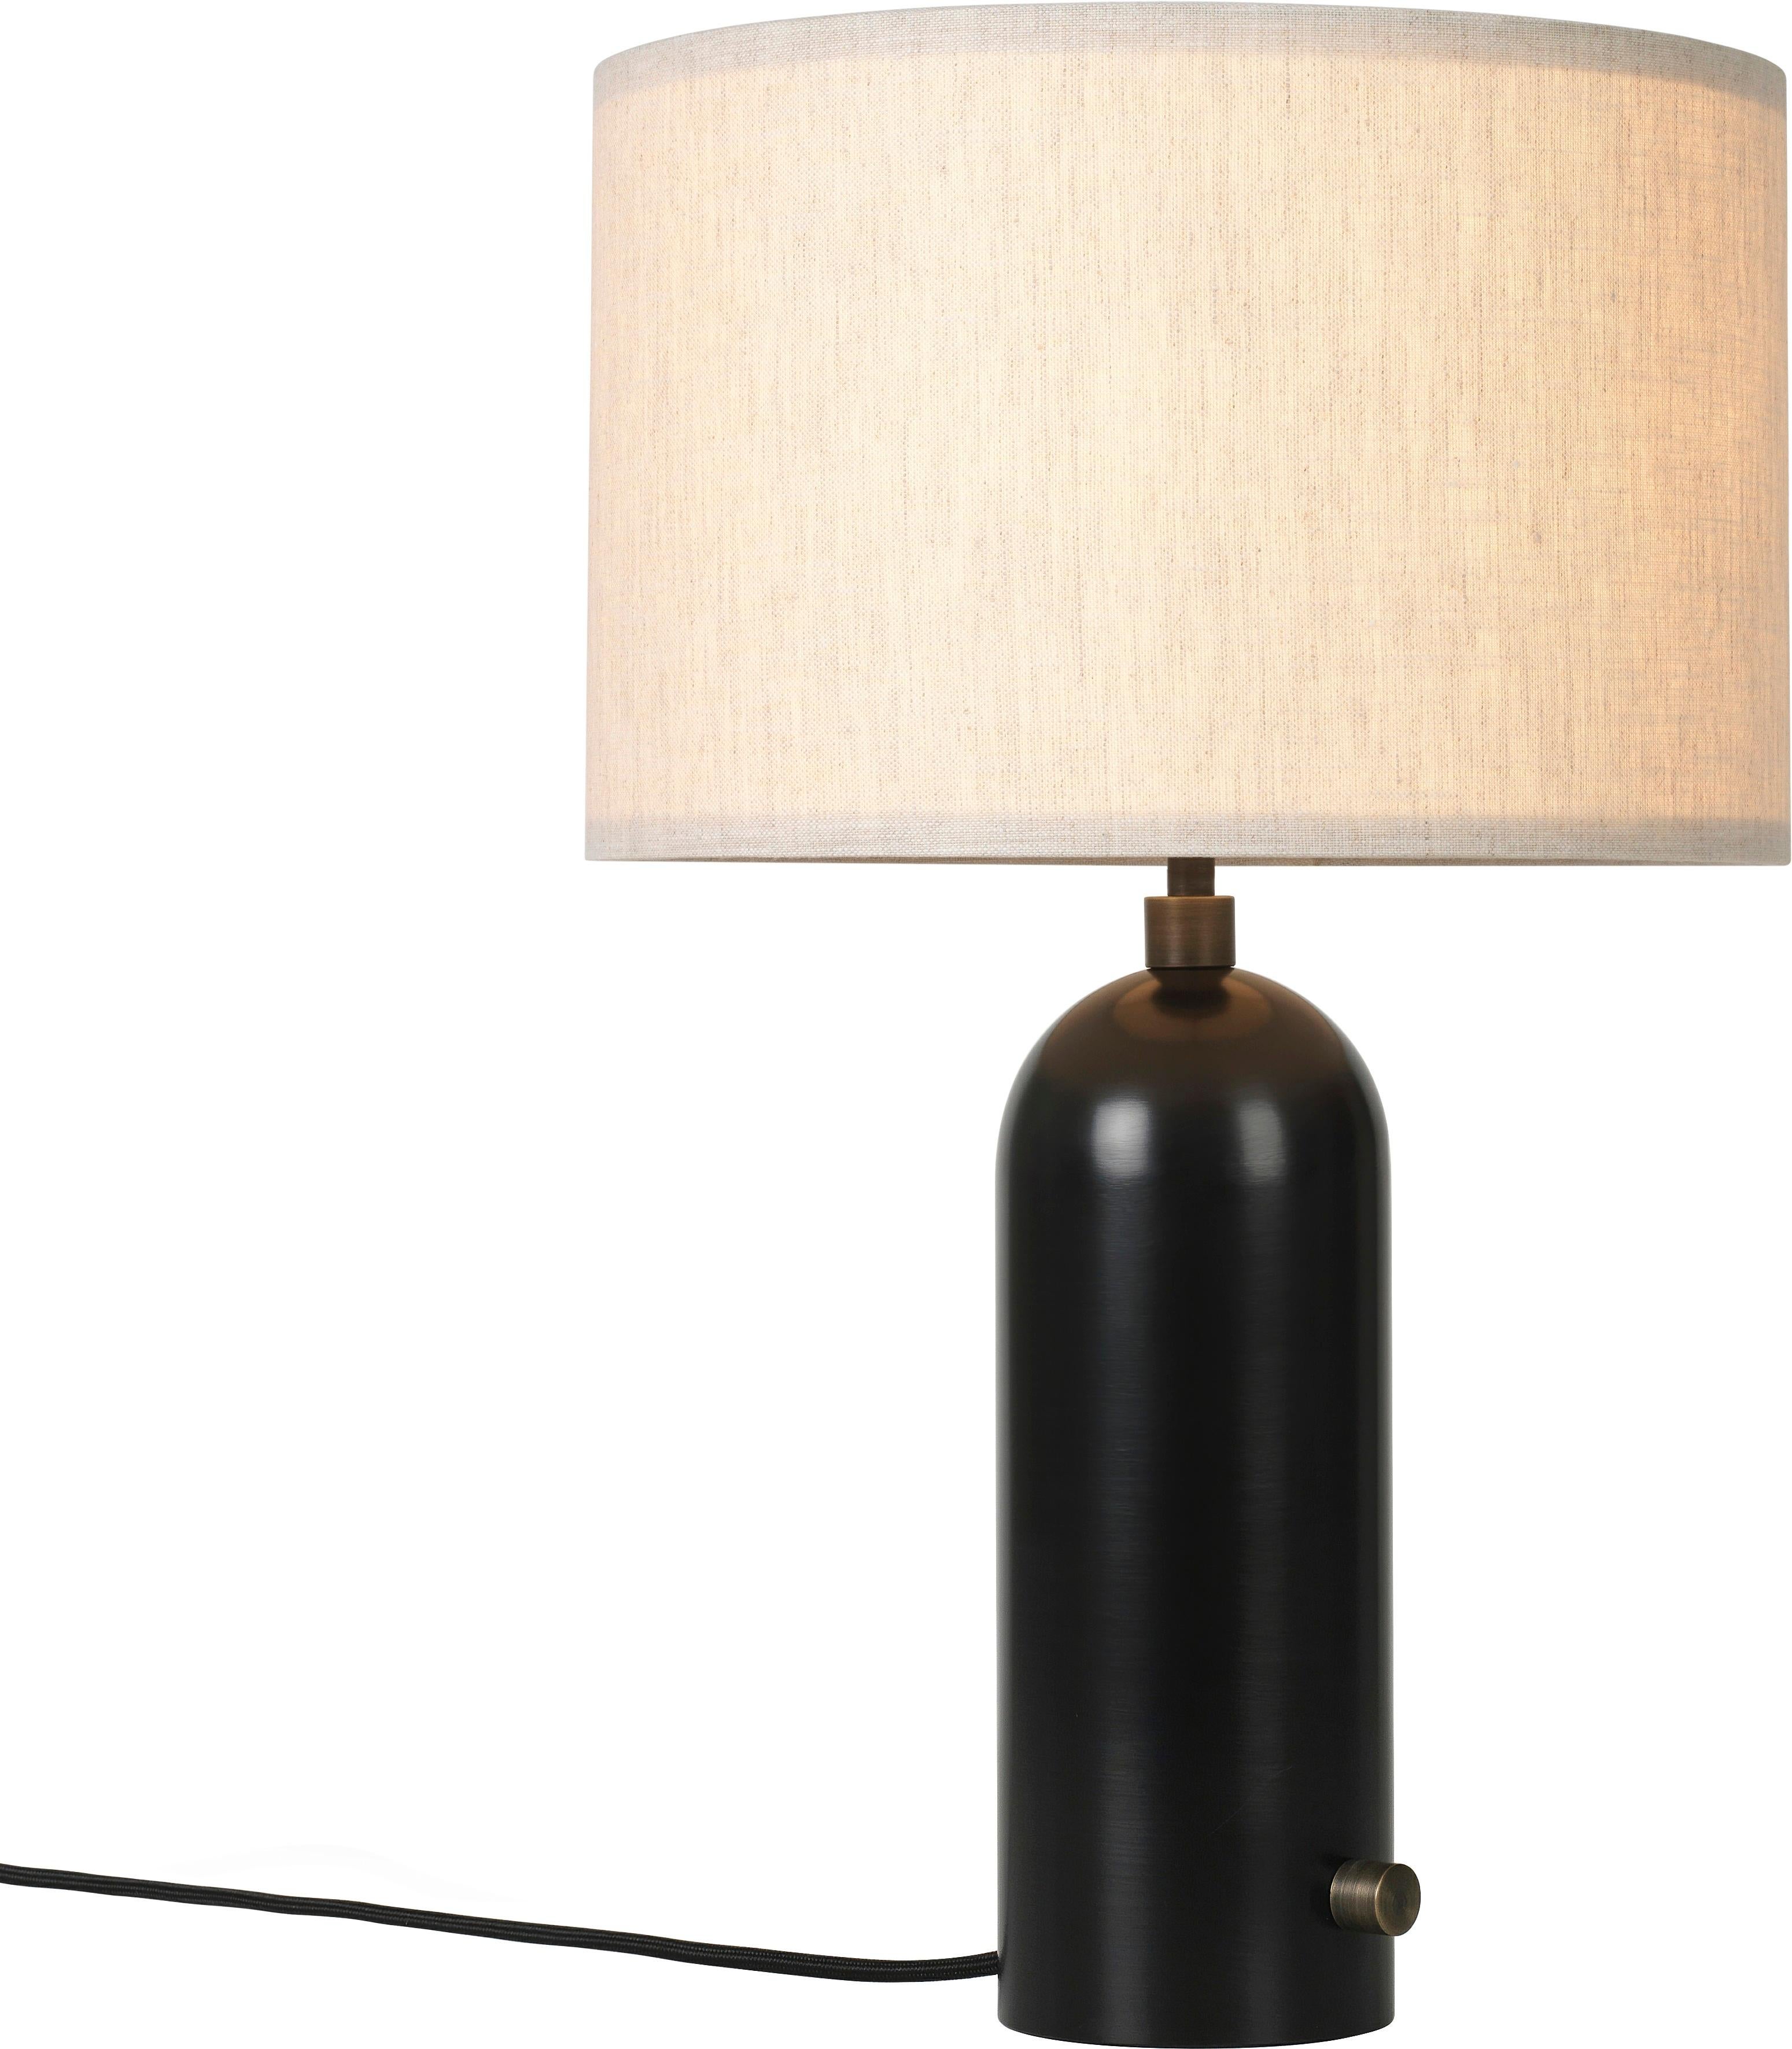 Danish Small 'Gravity' Blackened Steel Table Lamp by Space Copenhagen for Gubi For Sale